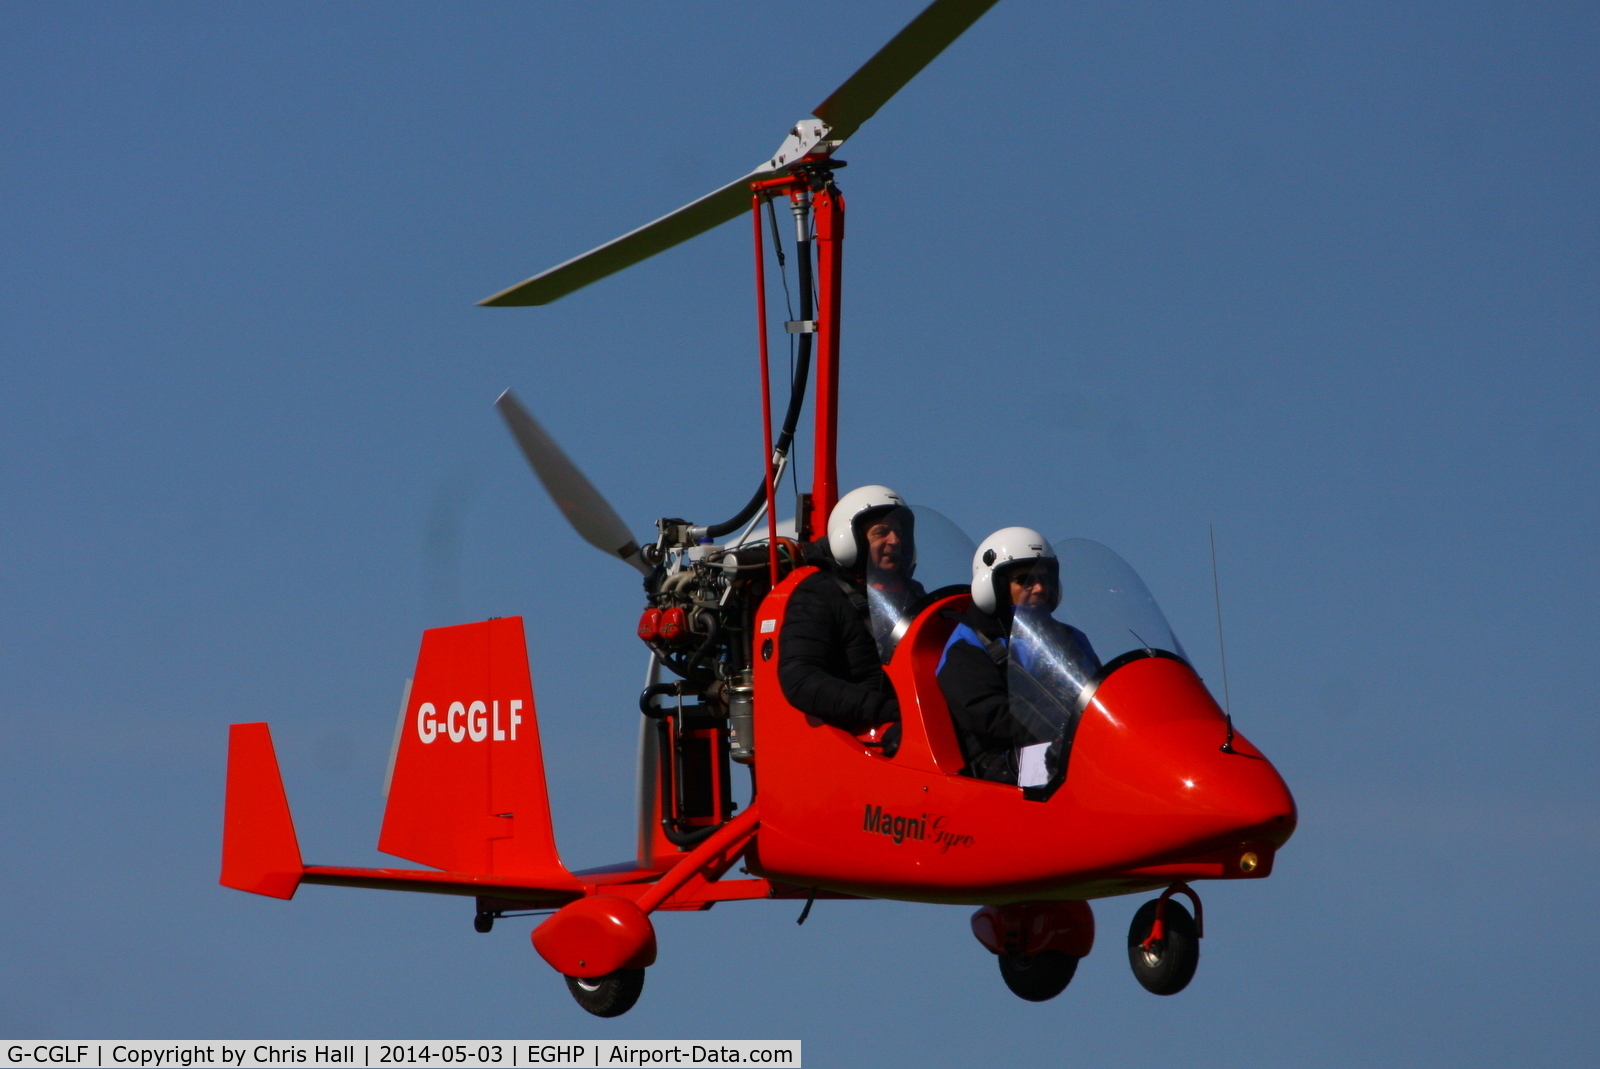 G-CGLF, 2009 Magni Gyro M-16C Tandem Trainer C/N 16-09-5614, at the 2014 Microlight Trade Fair, Popham